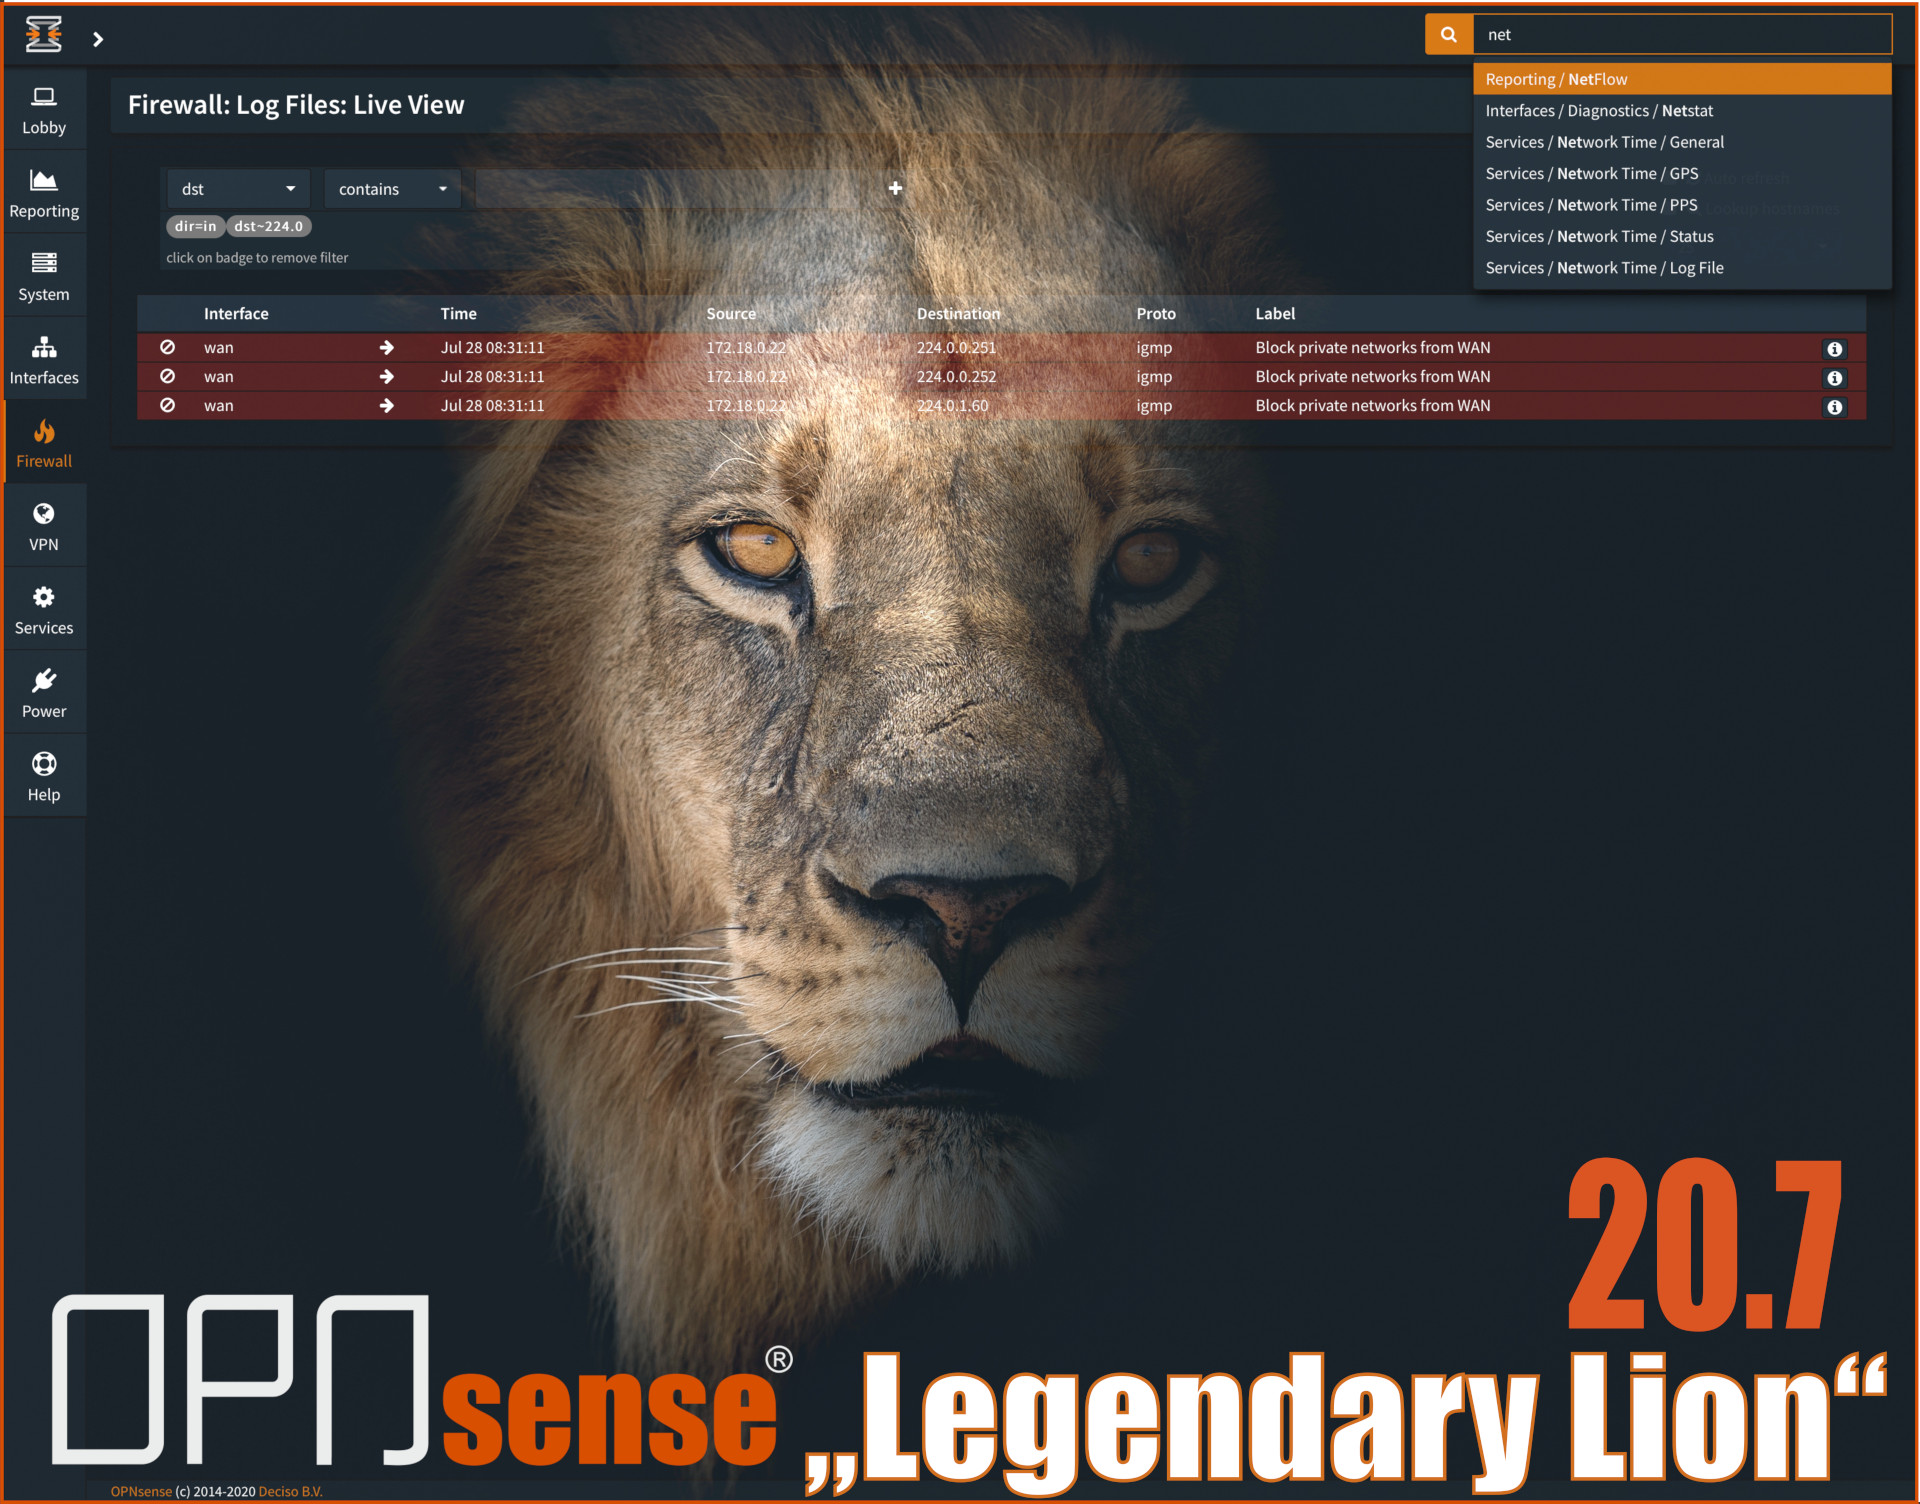 Press Photo OPNsense 20.7 Legendary Lion